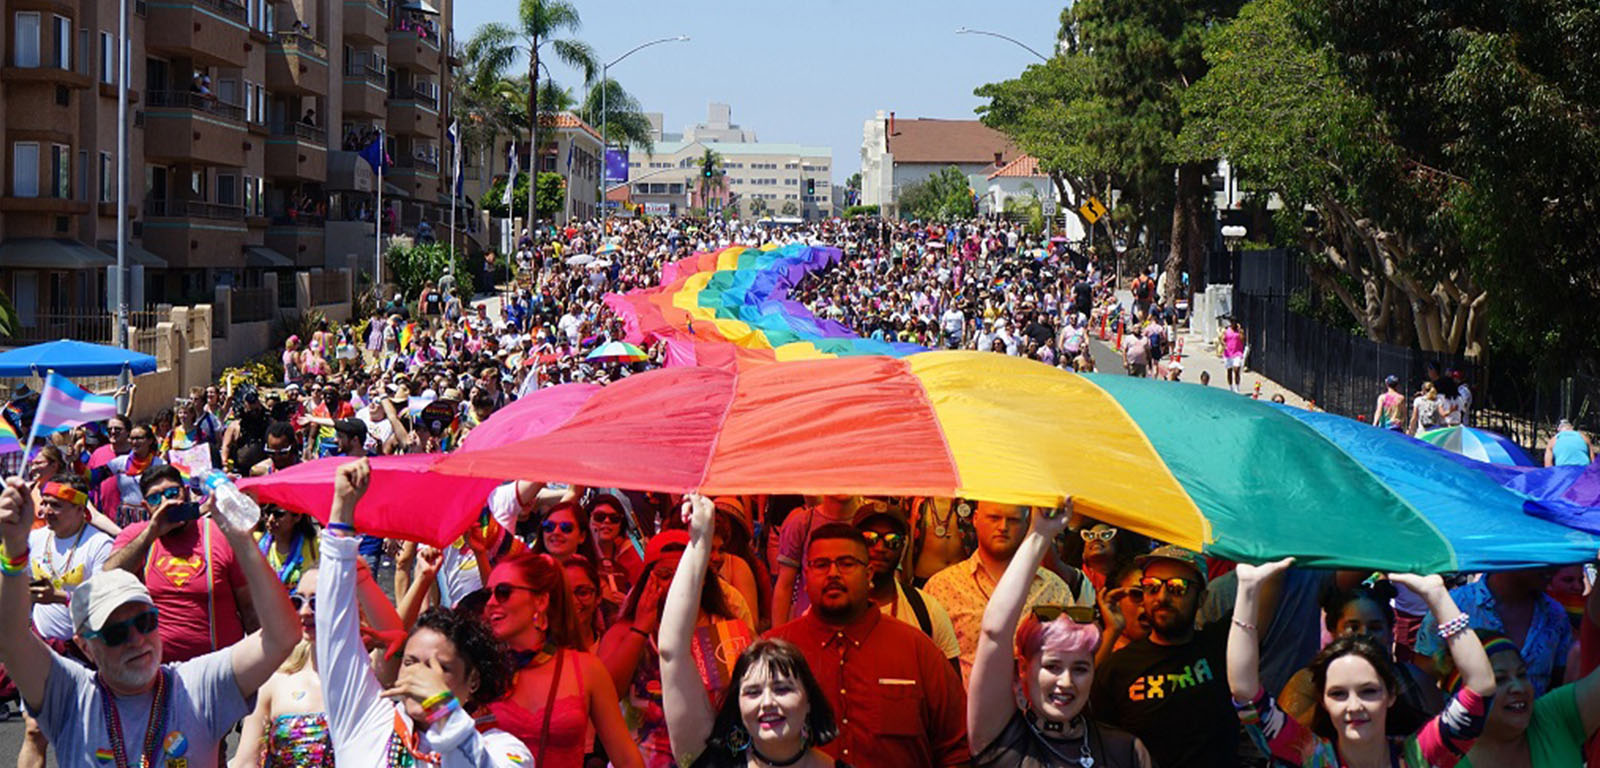 San Diego Pride Home